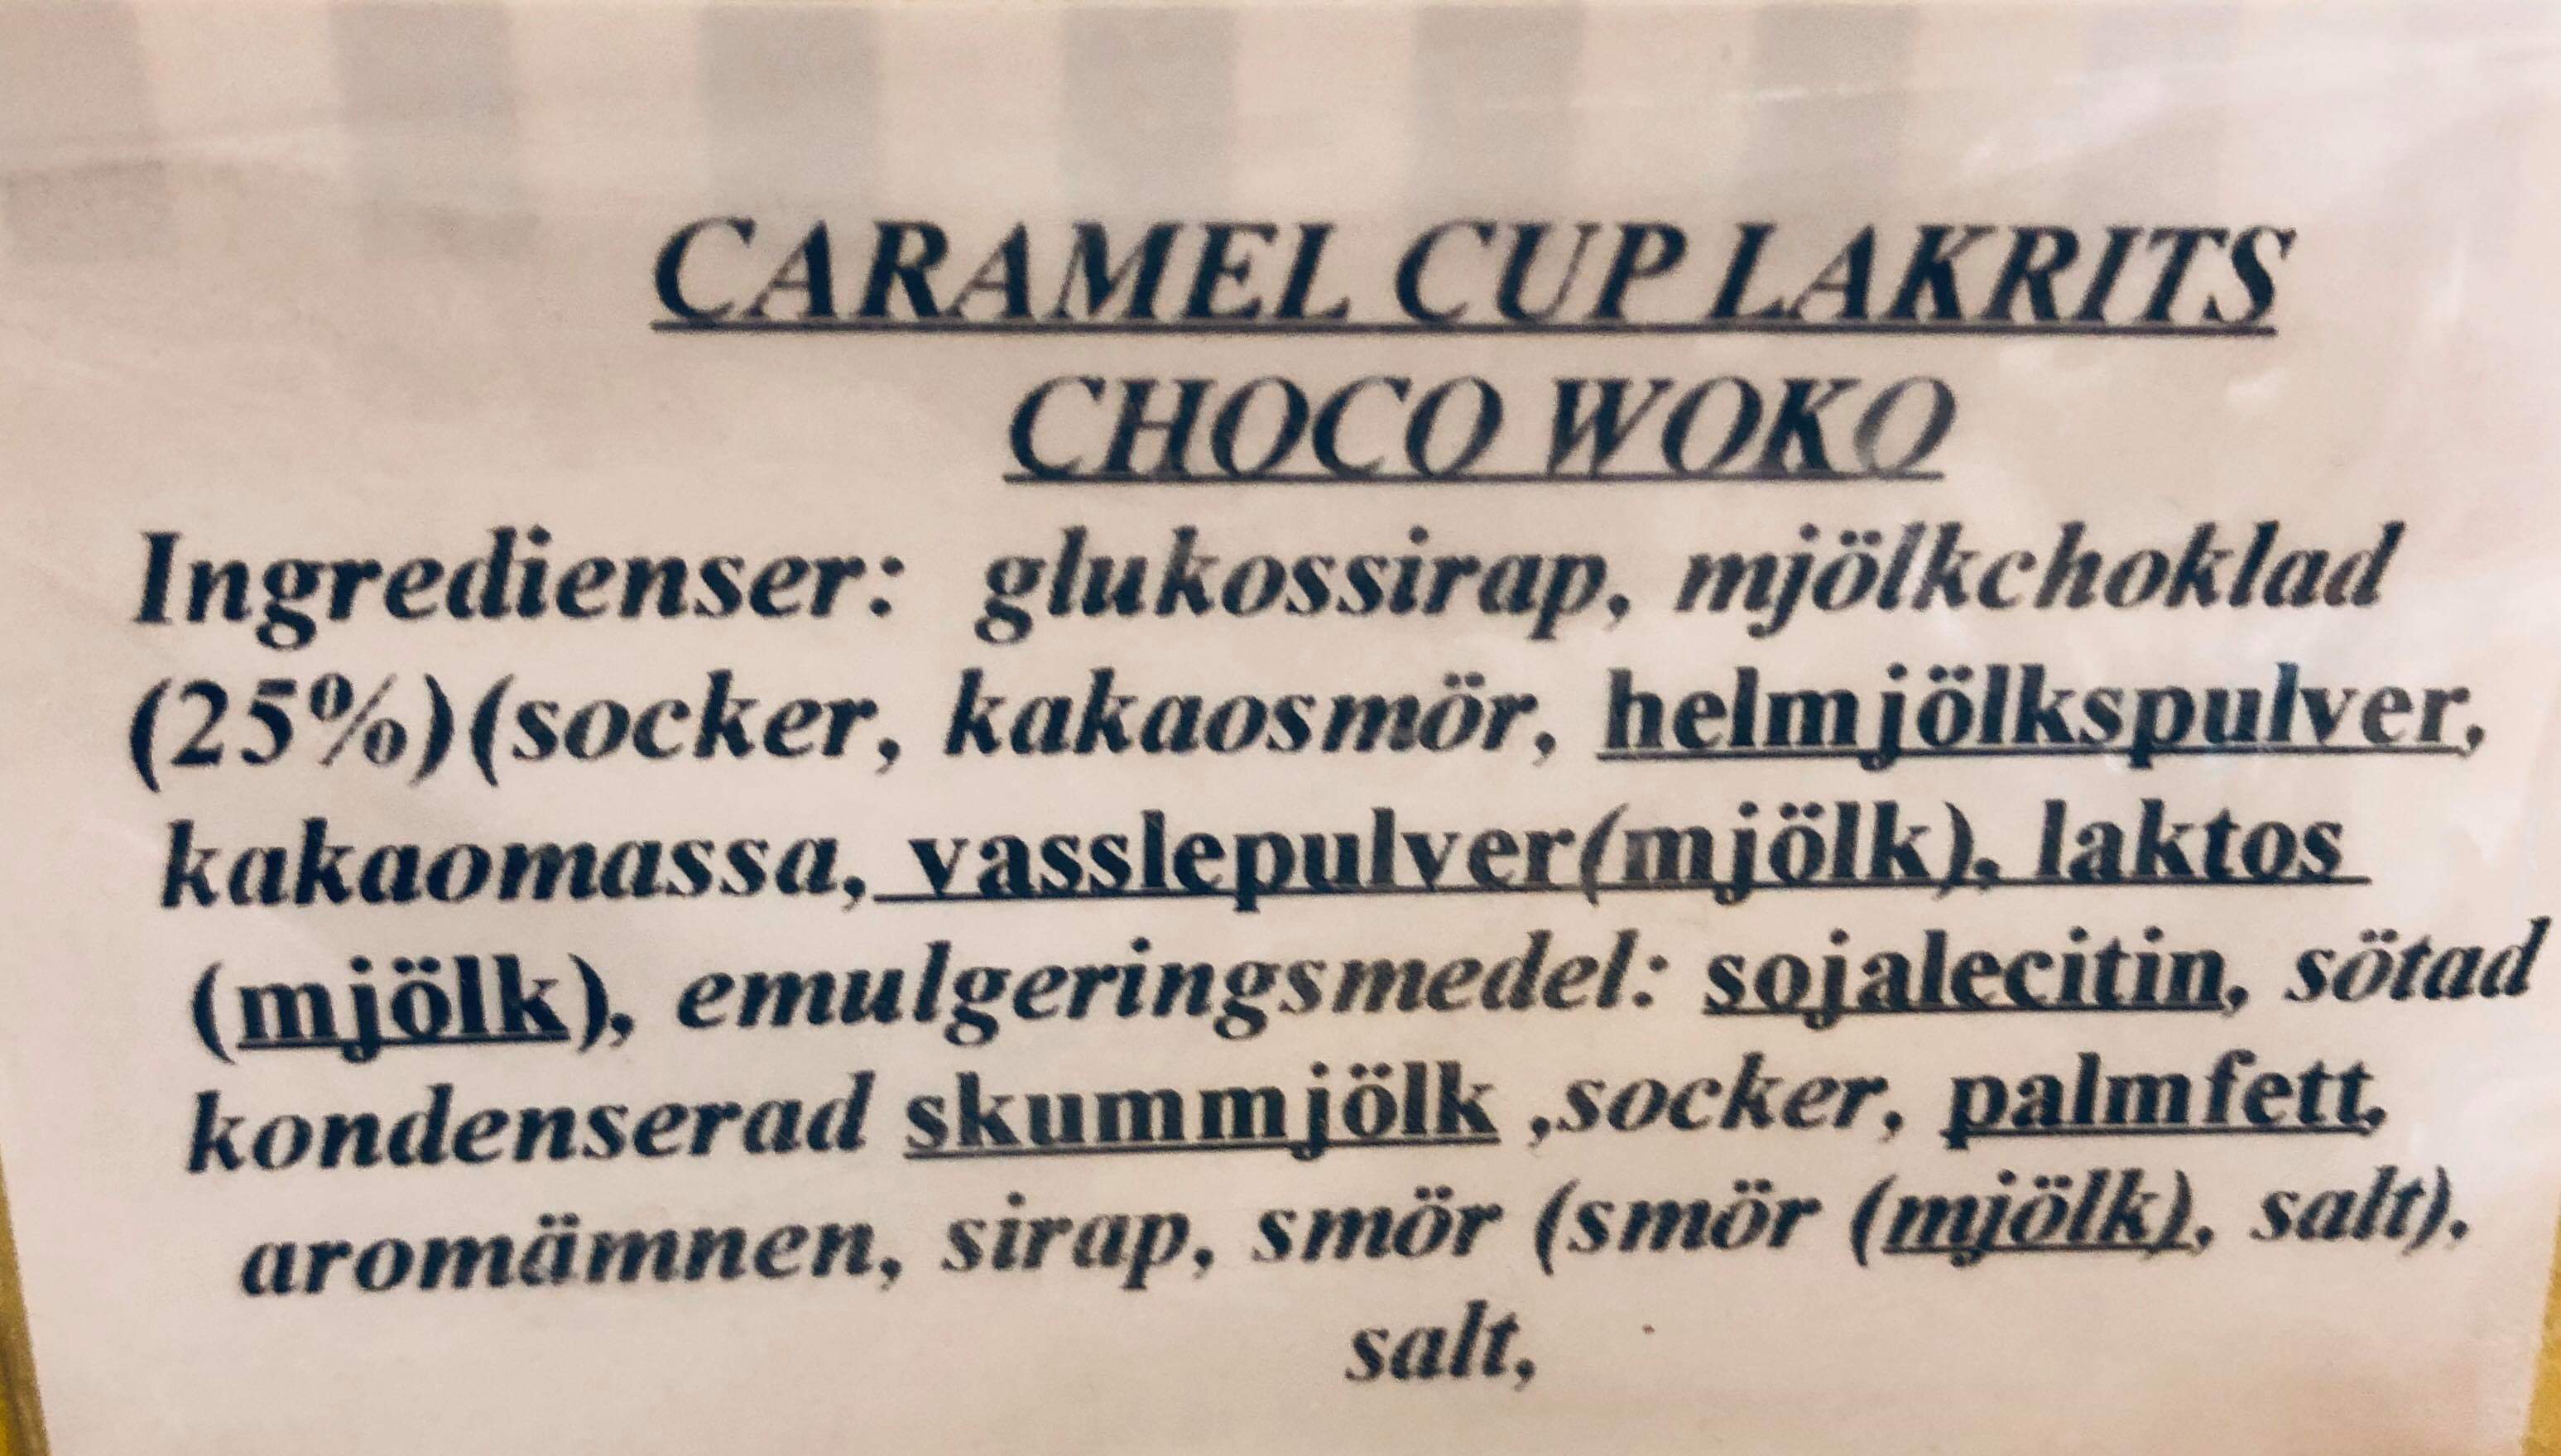 Caramel cup lakrits